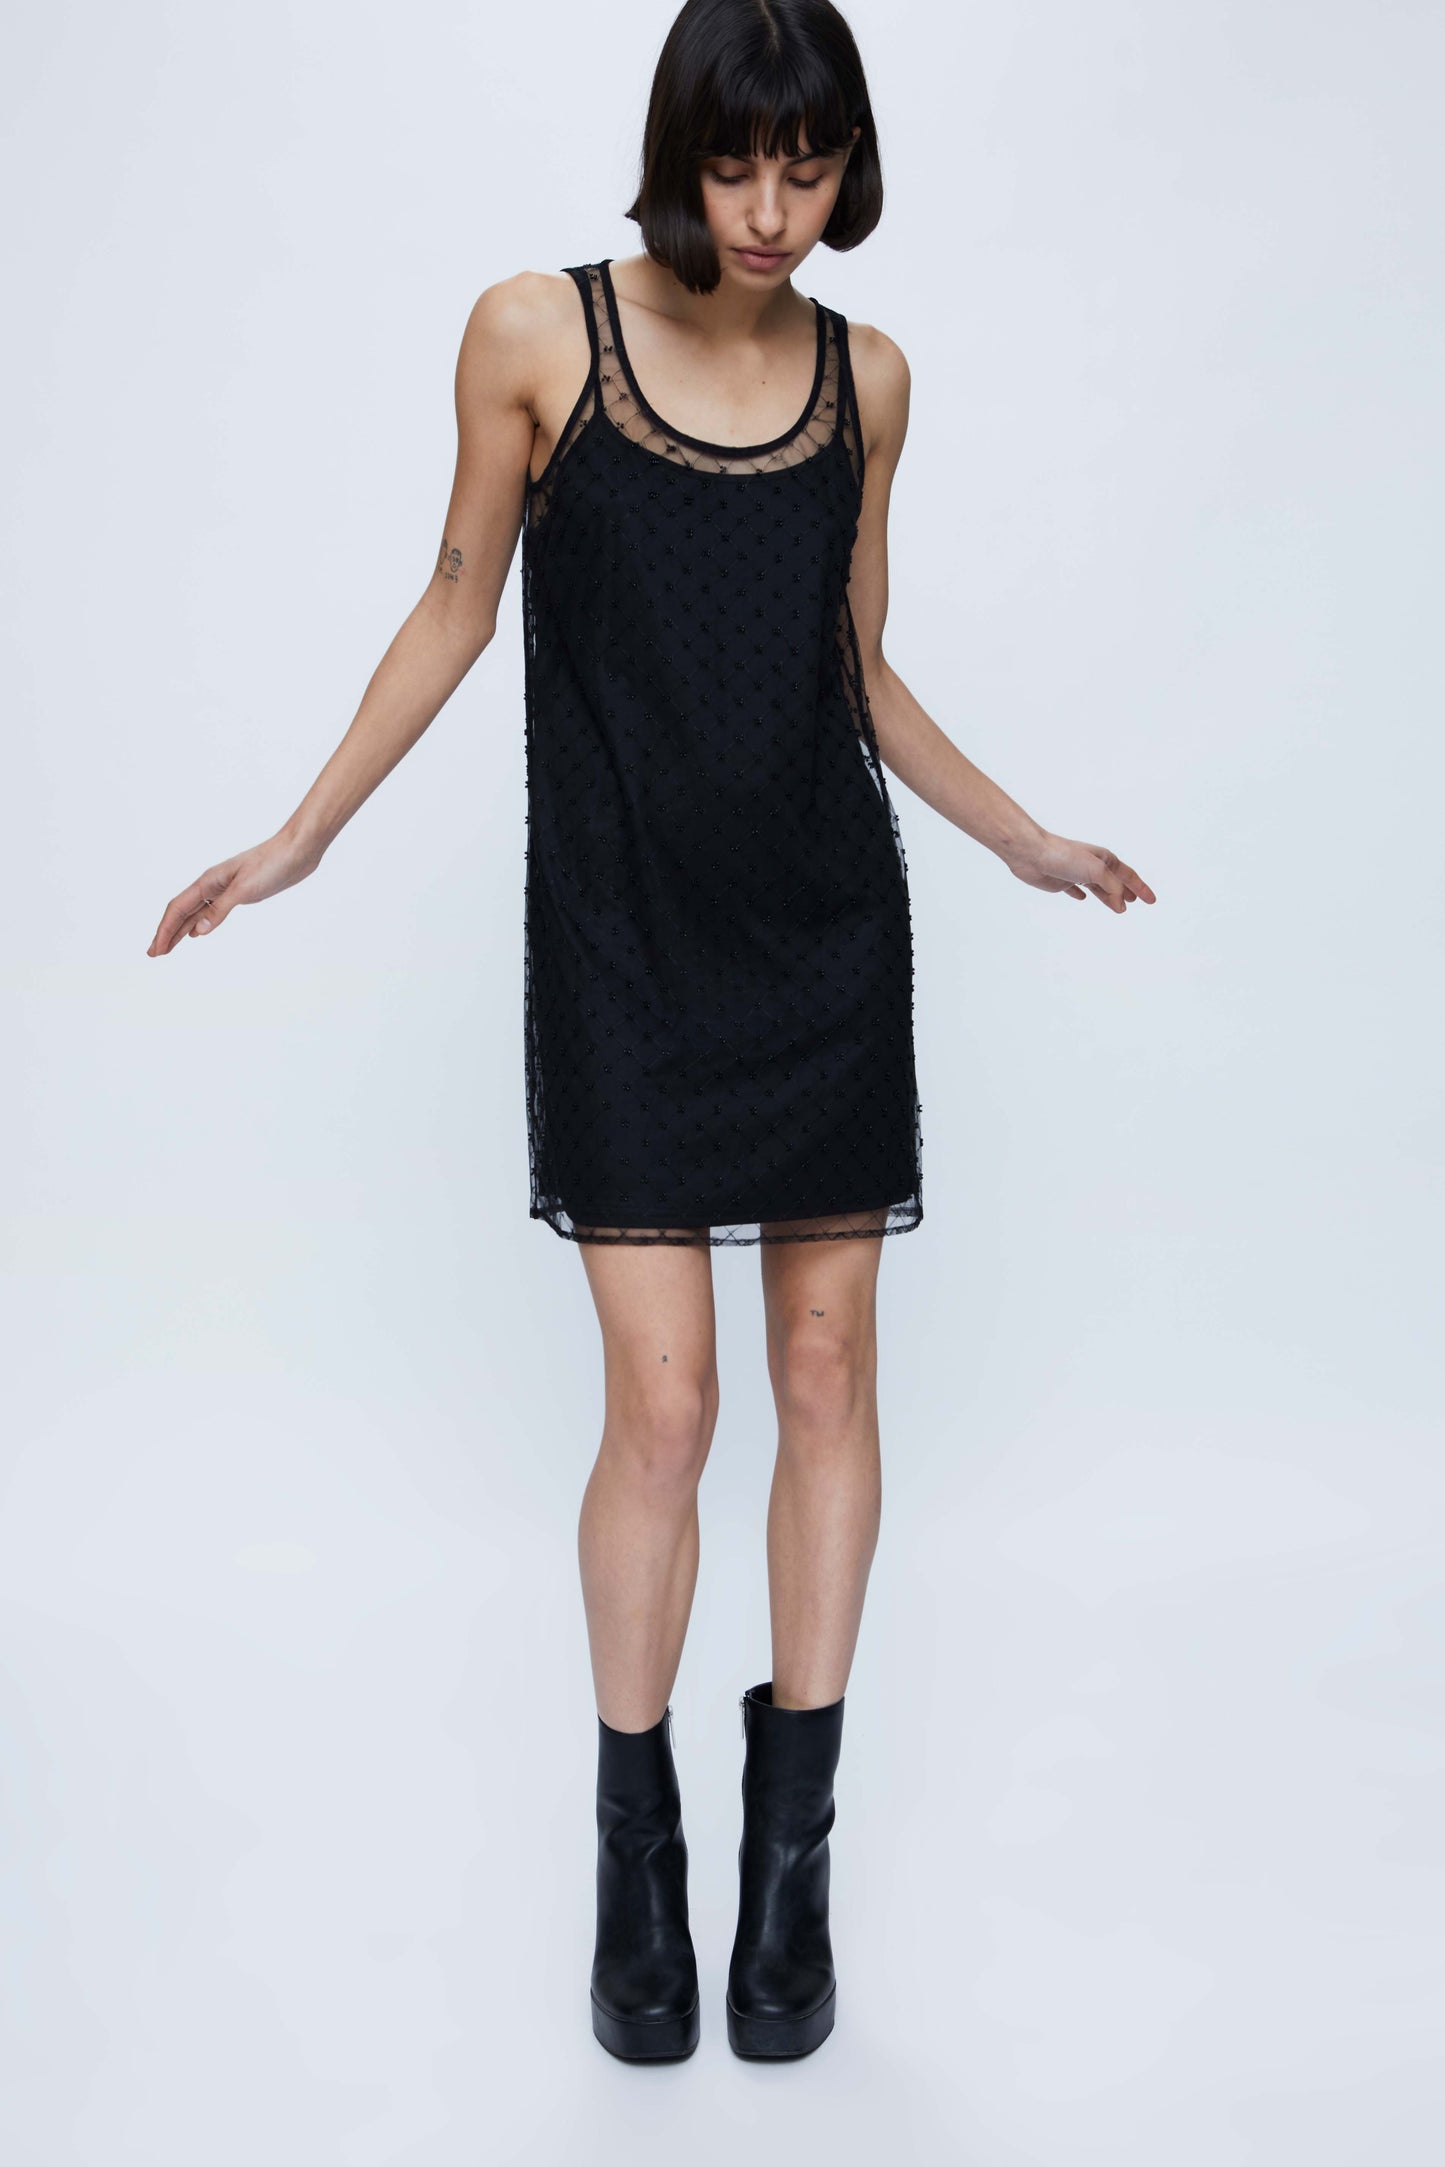 Short black lingerie dress with rhinestone mesh